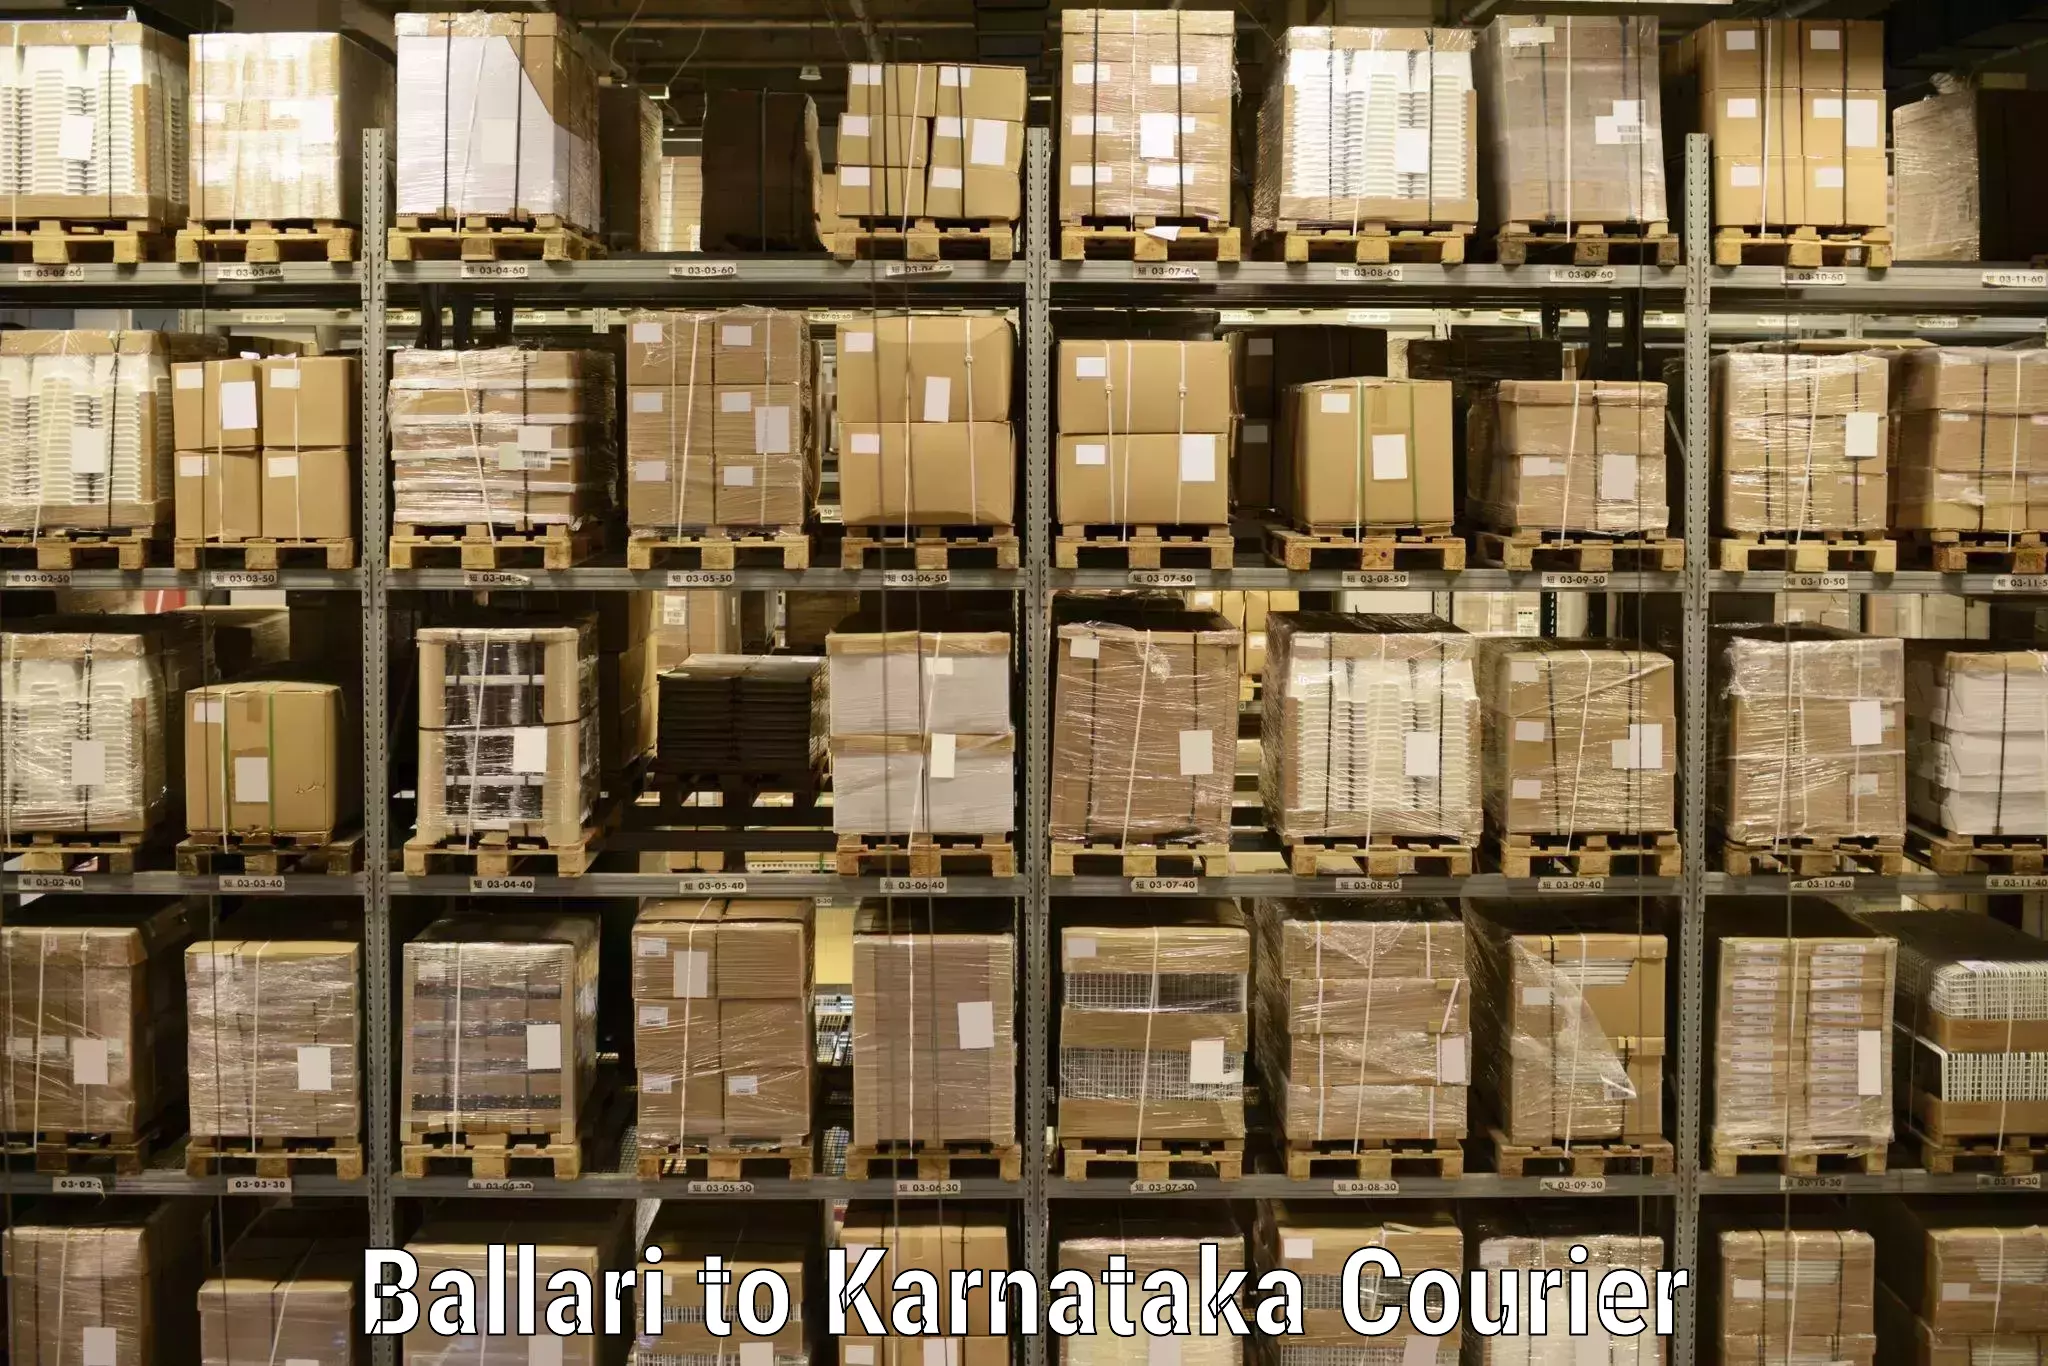 High-speed parcel service Ballari to Gulbarga